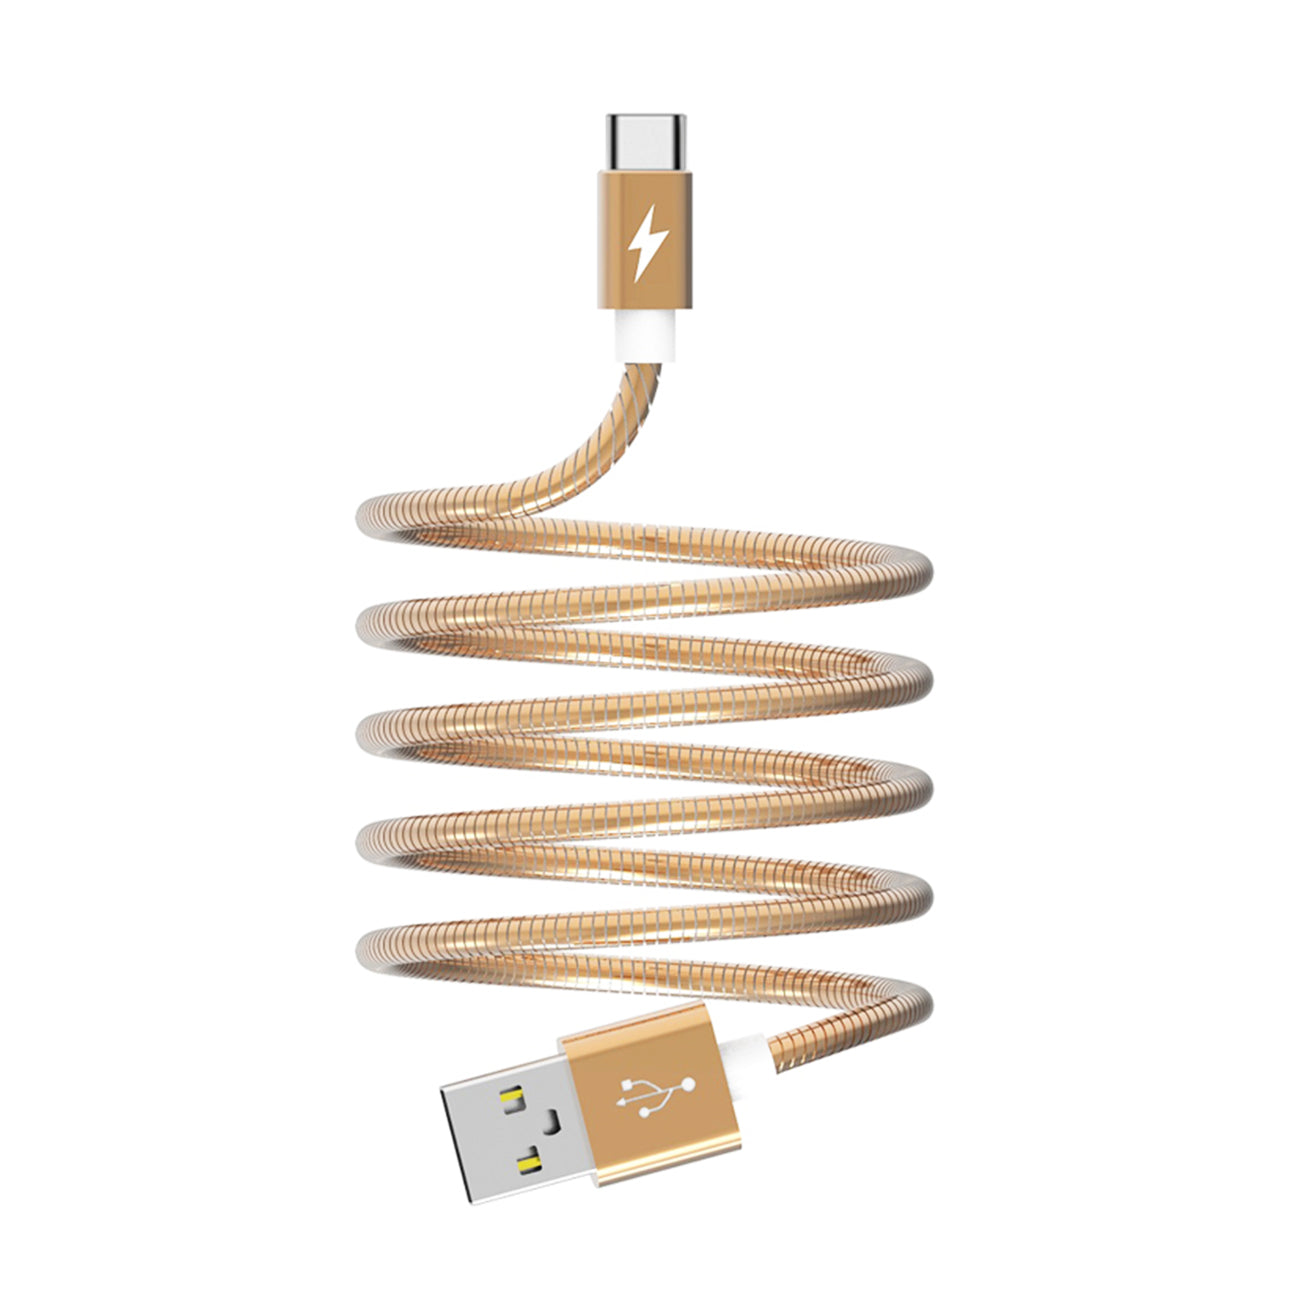 Data Cable Premium Full Hi-Speed Moisture 2.6A Gold Color